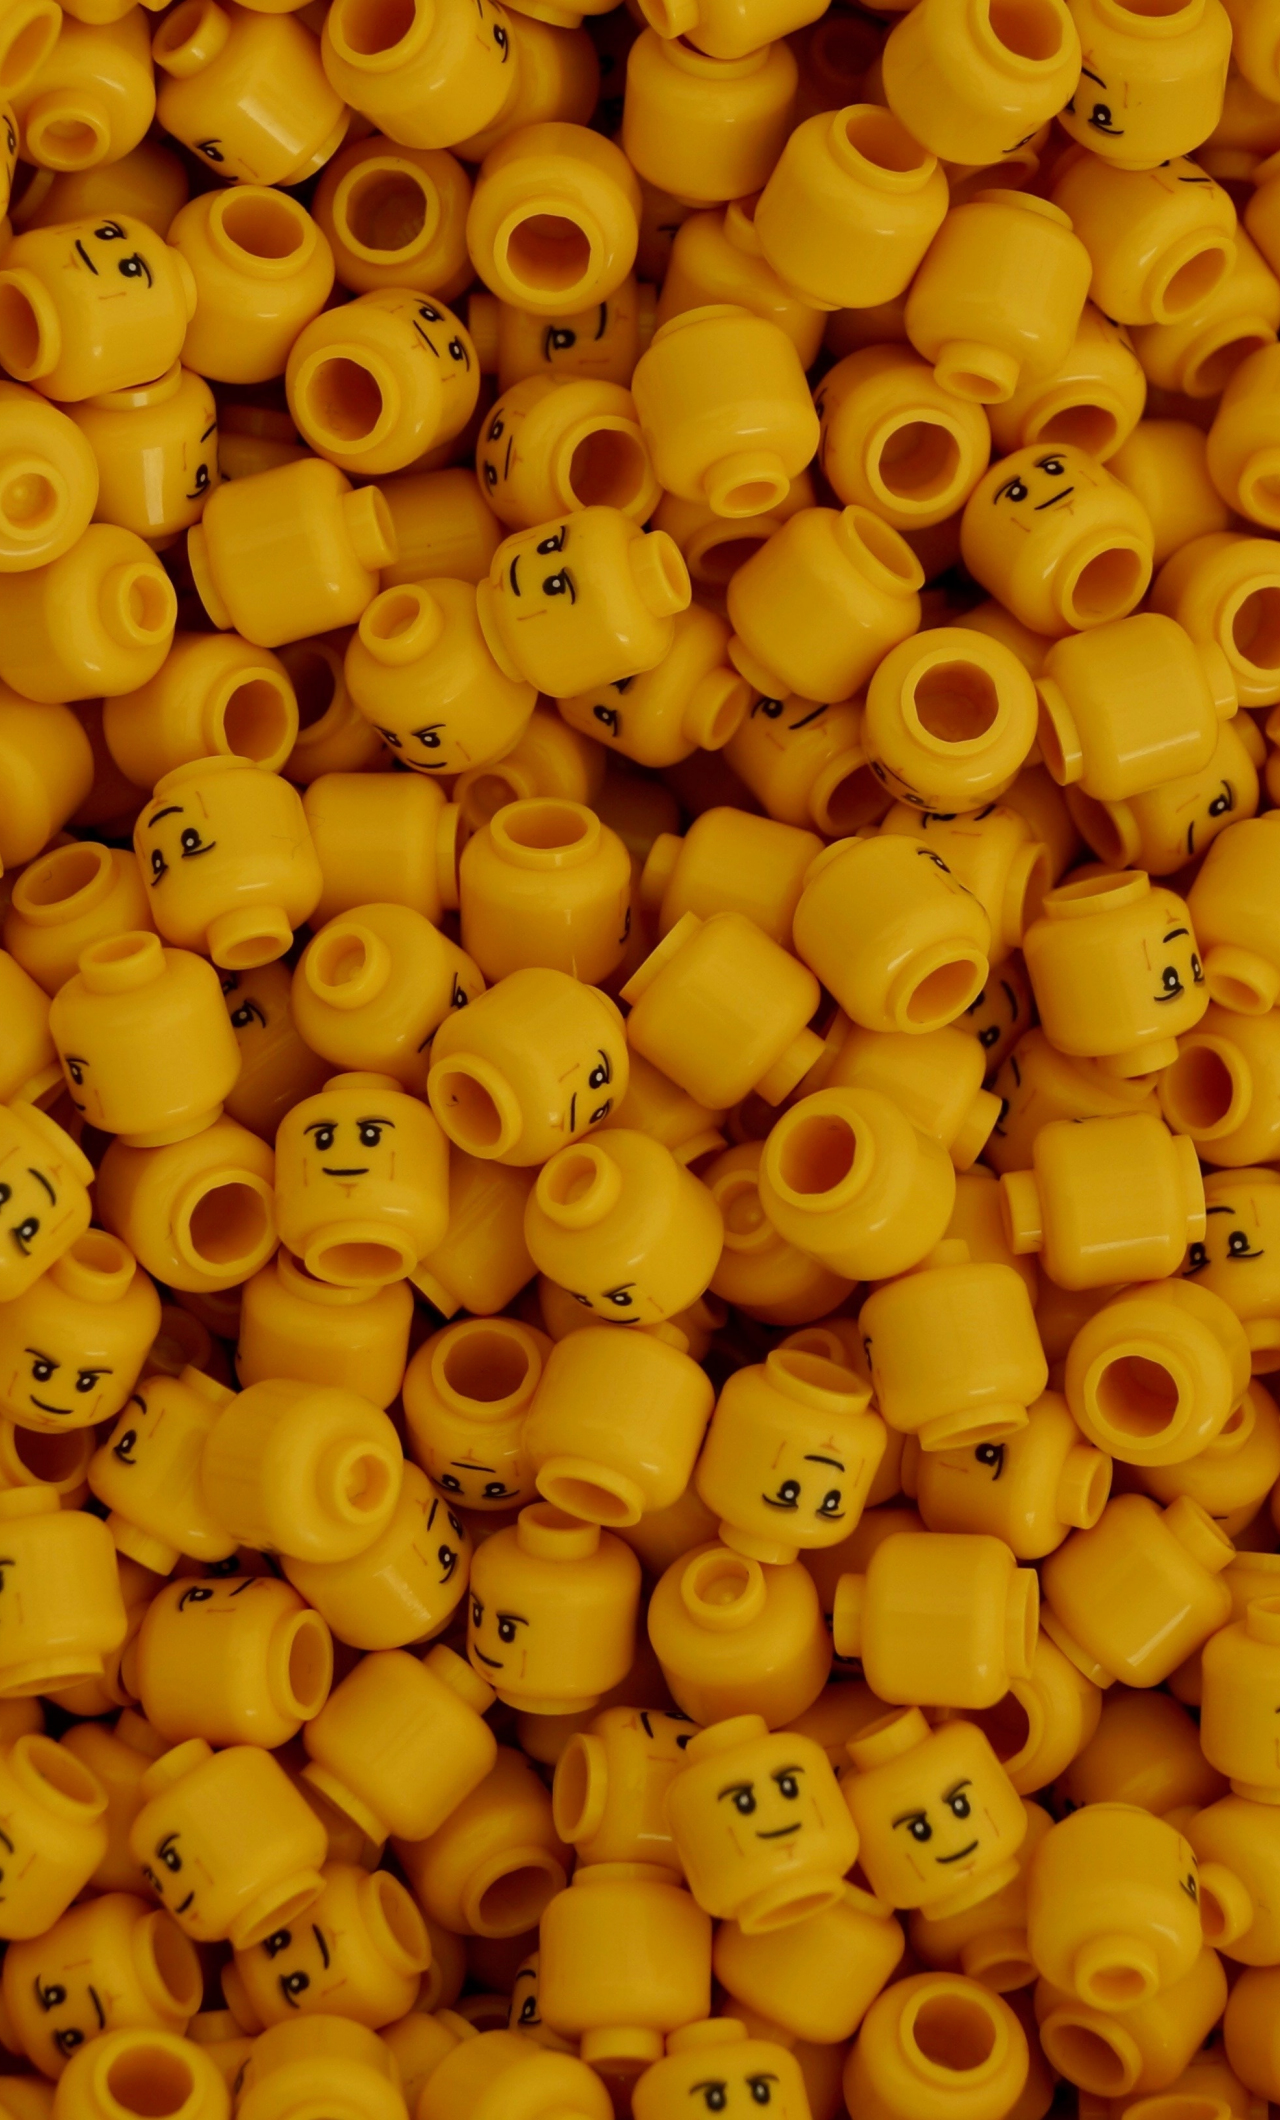 Yellow, Lego, toy, 1280x2120 wallpaper